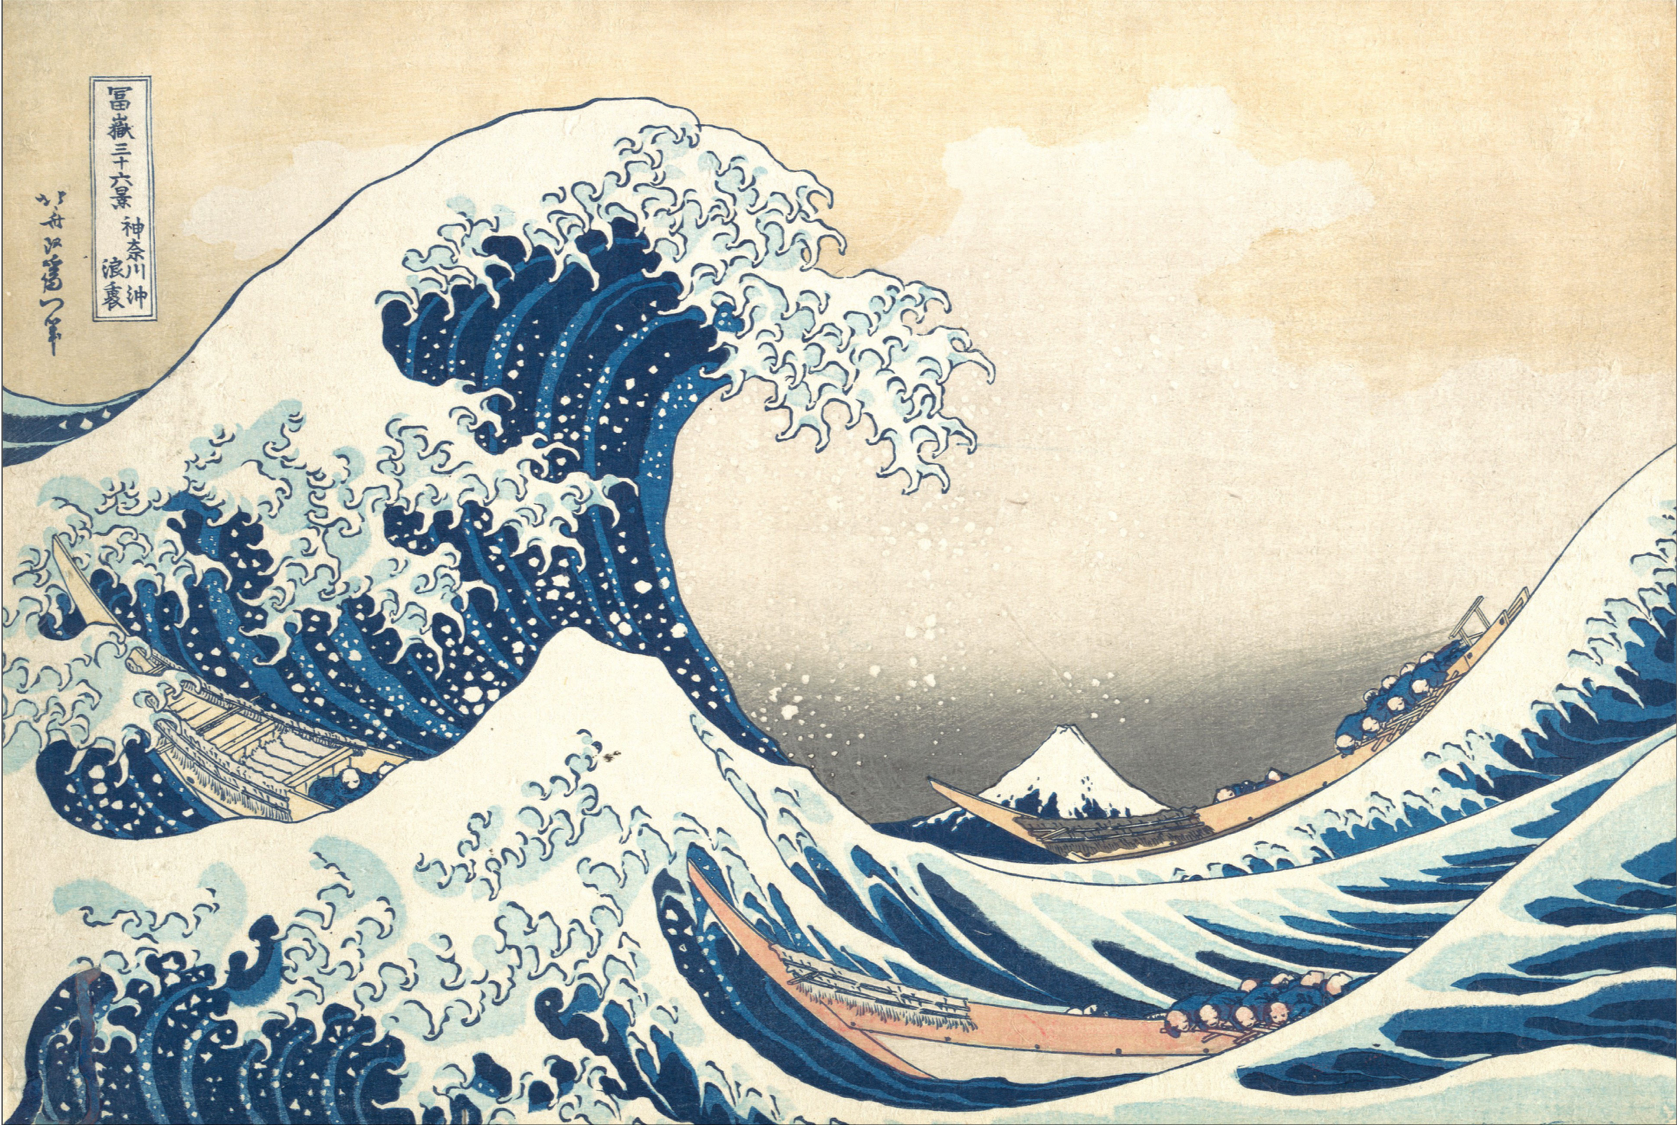 Katsushika Hokusai’s iconic woodblock print The Great Wave off Kanagawa